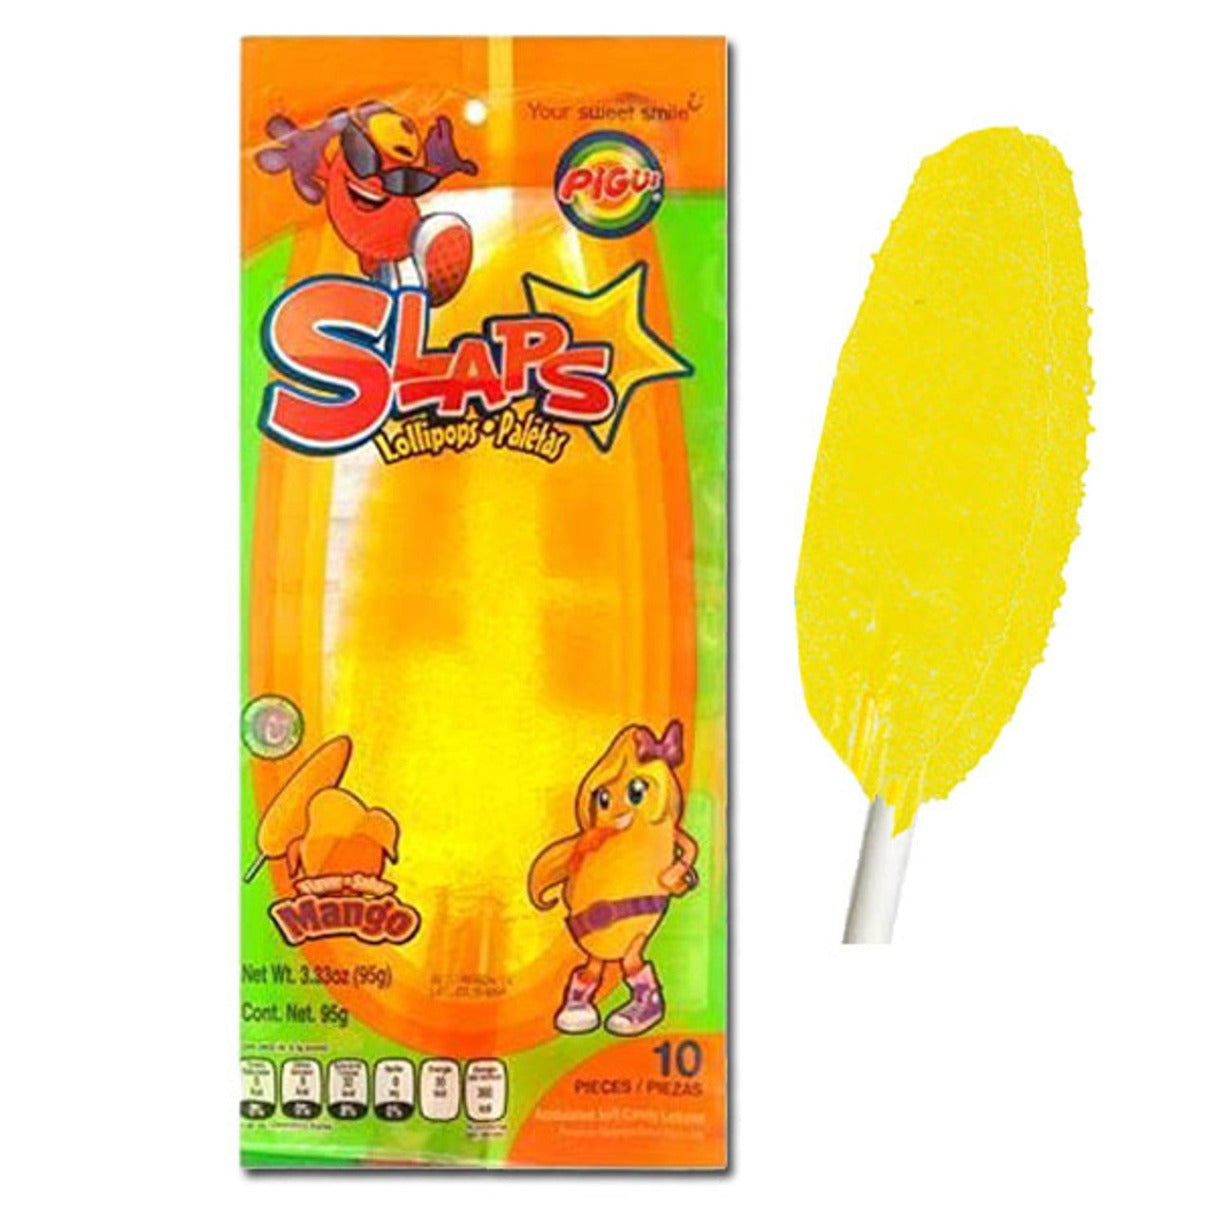 Slaps Lollipop Mango 3.33oz - 10ct